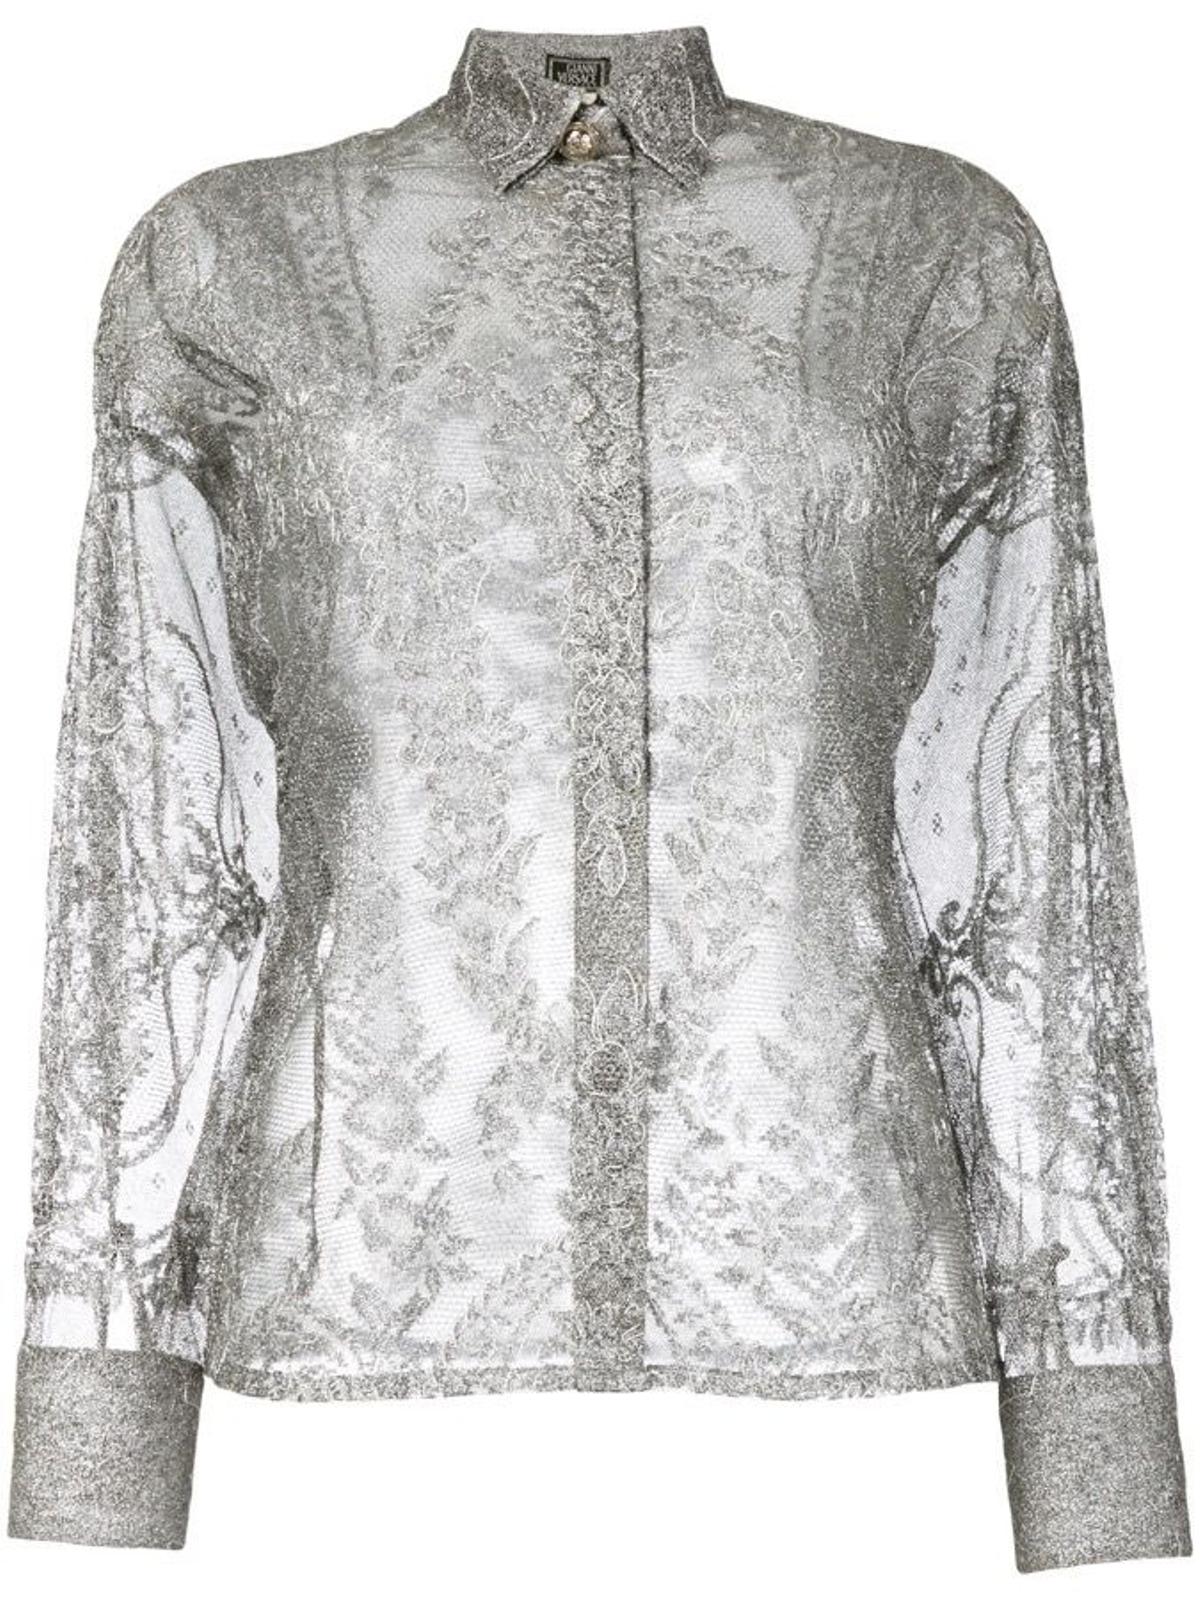 William Vintage Gianni Versace para Farfetch, camisa de encaje